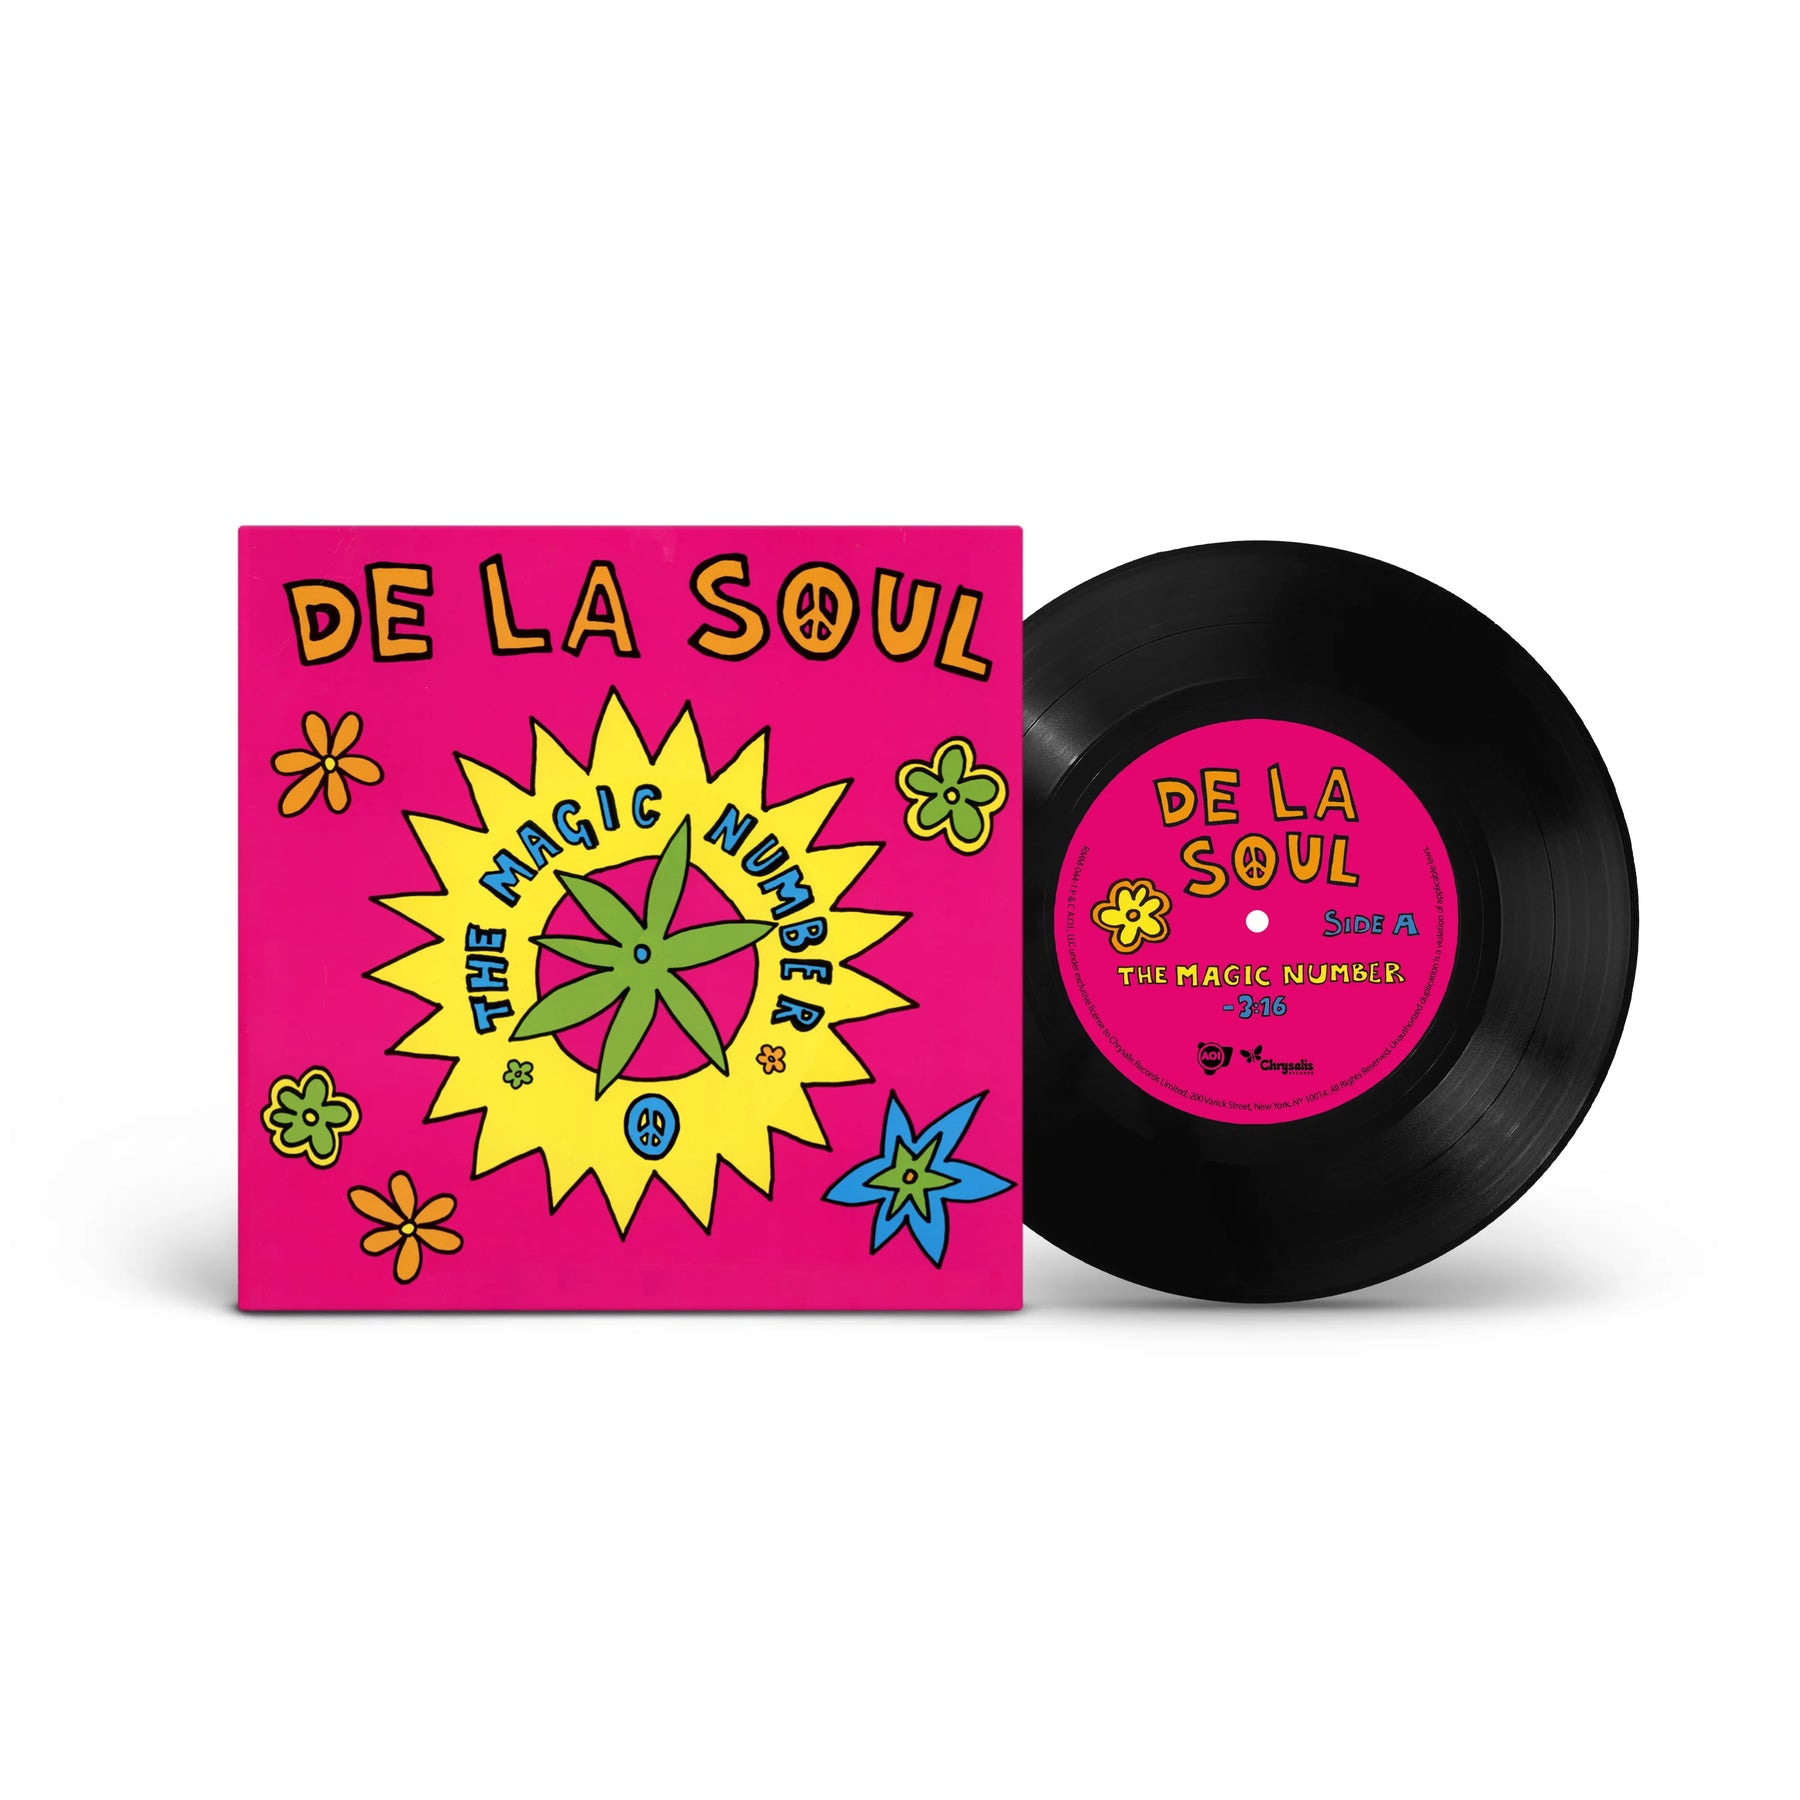 De La Soul - The Magic Number b/w Instrumental